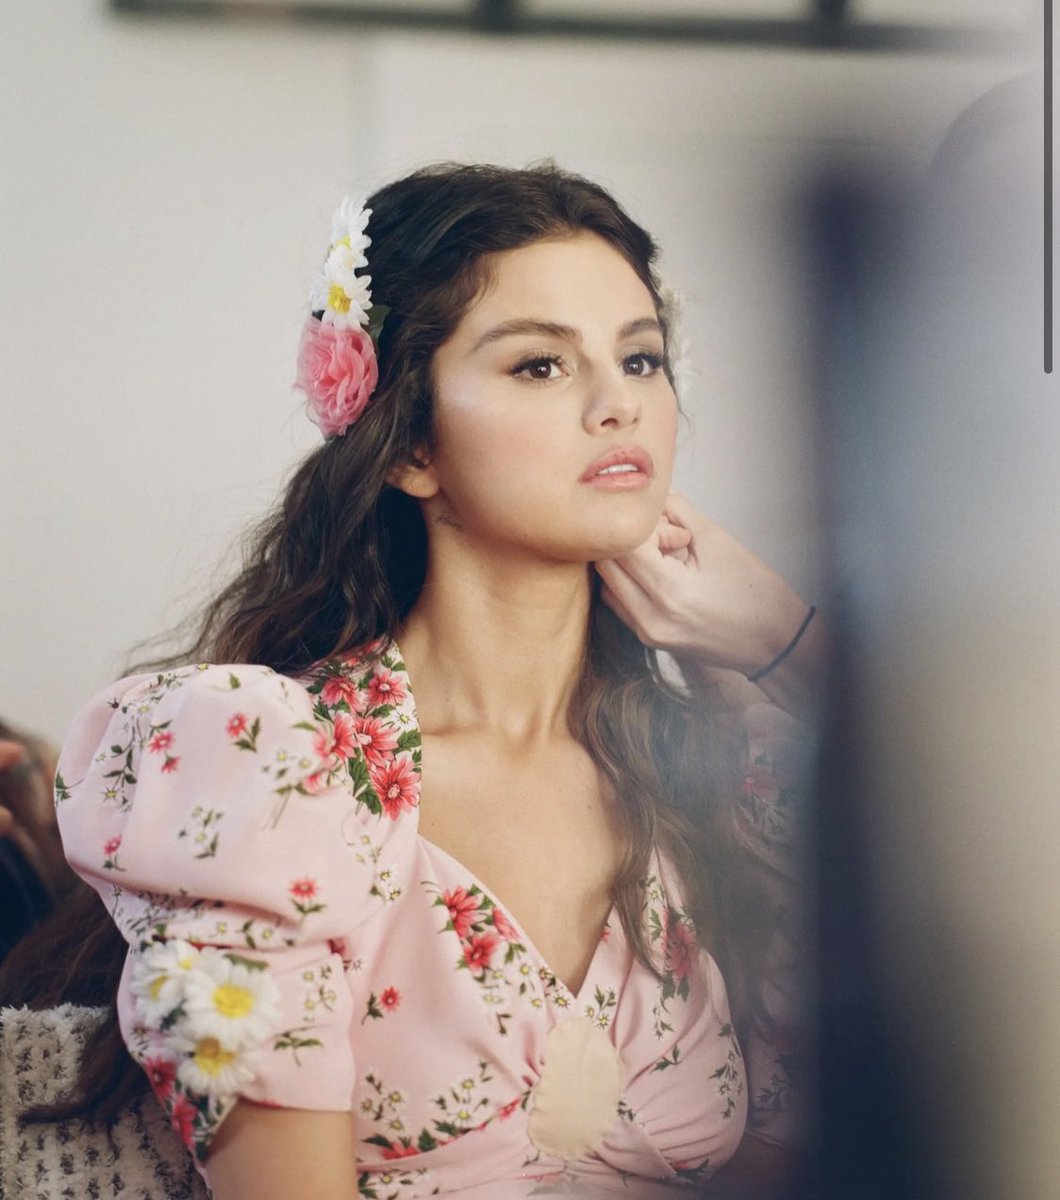 Selena Gomez in De Una Vez unlocked a whole other level of beauty